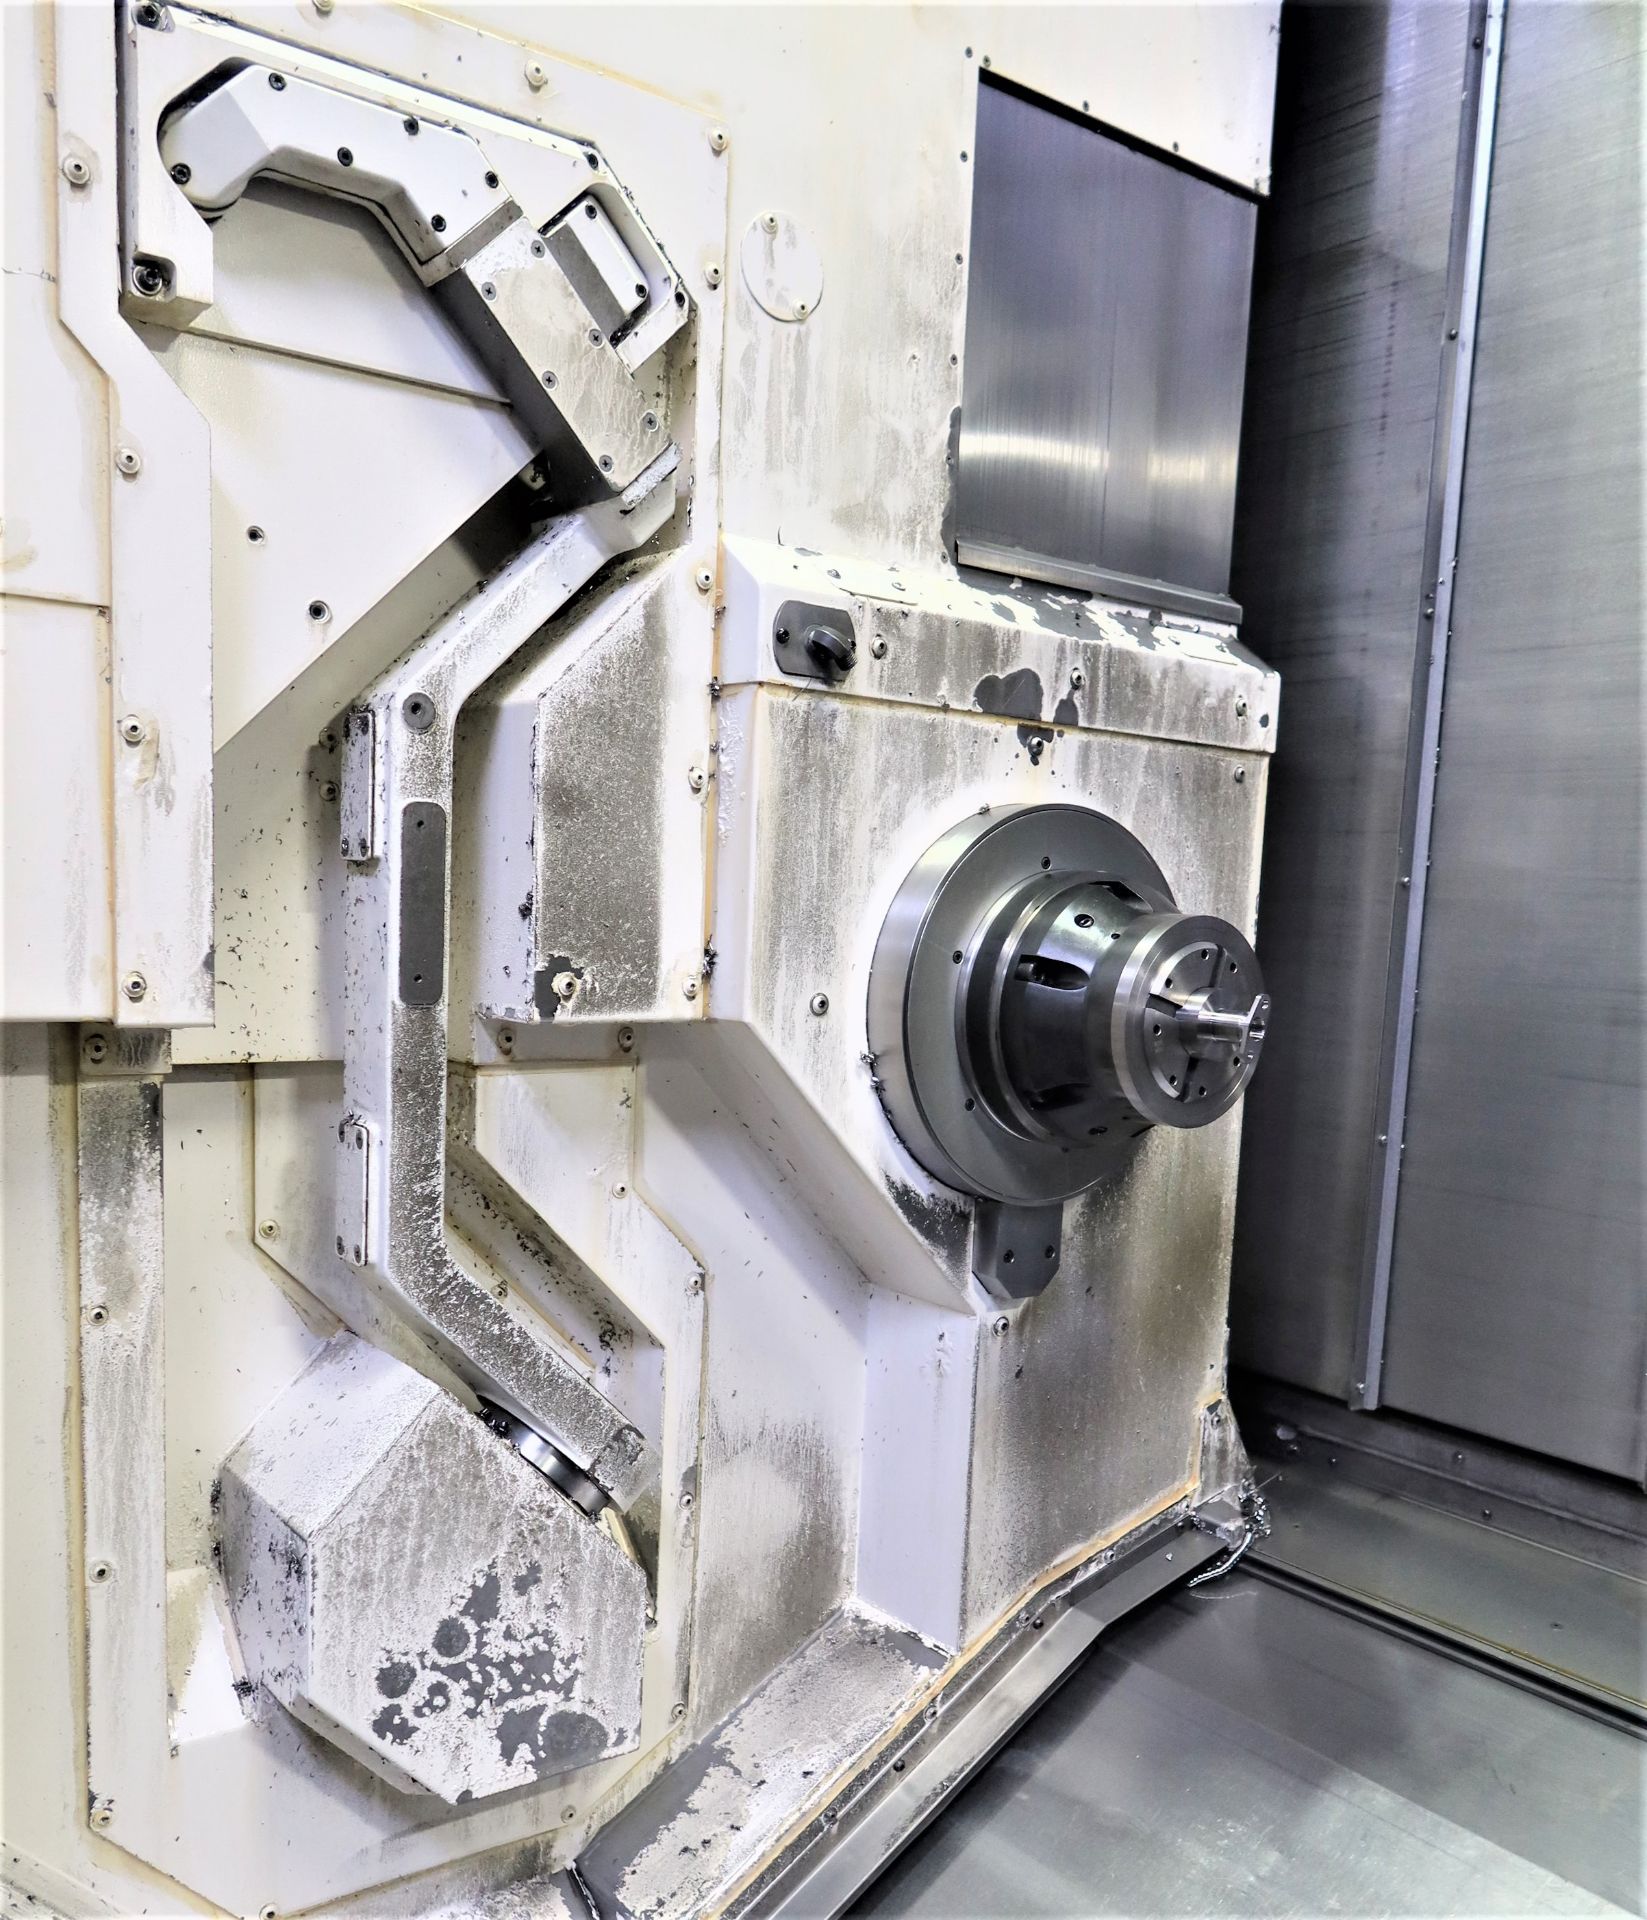 Okuma Multus U3000 5-Axis CNC Mill Lathe, New 2015 - Image 4 of 15